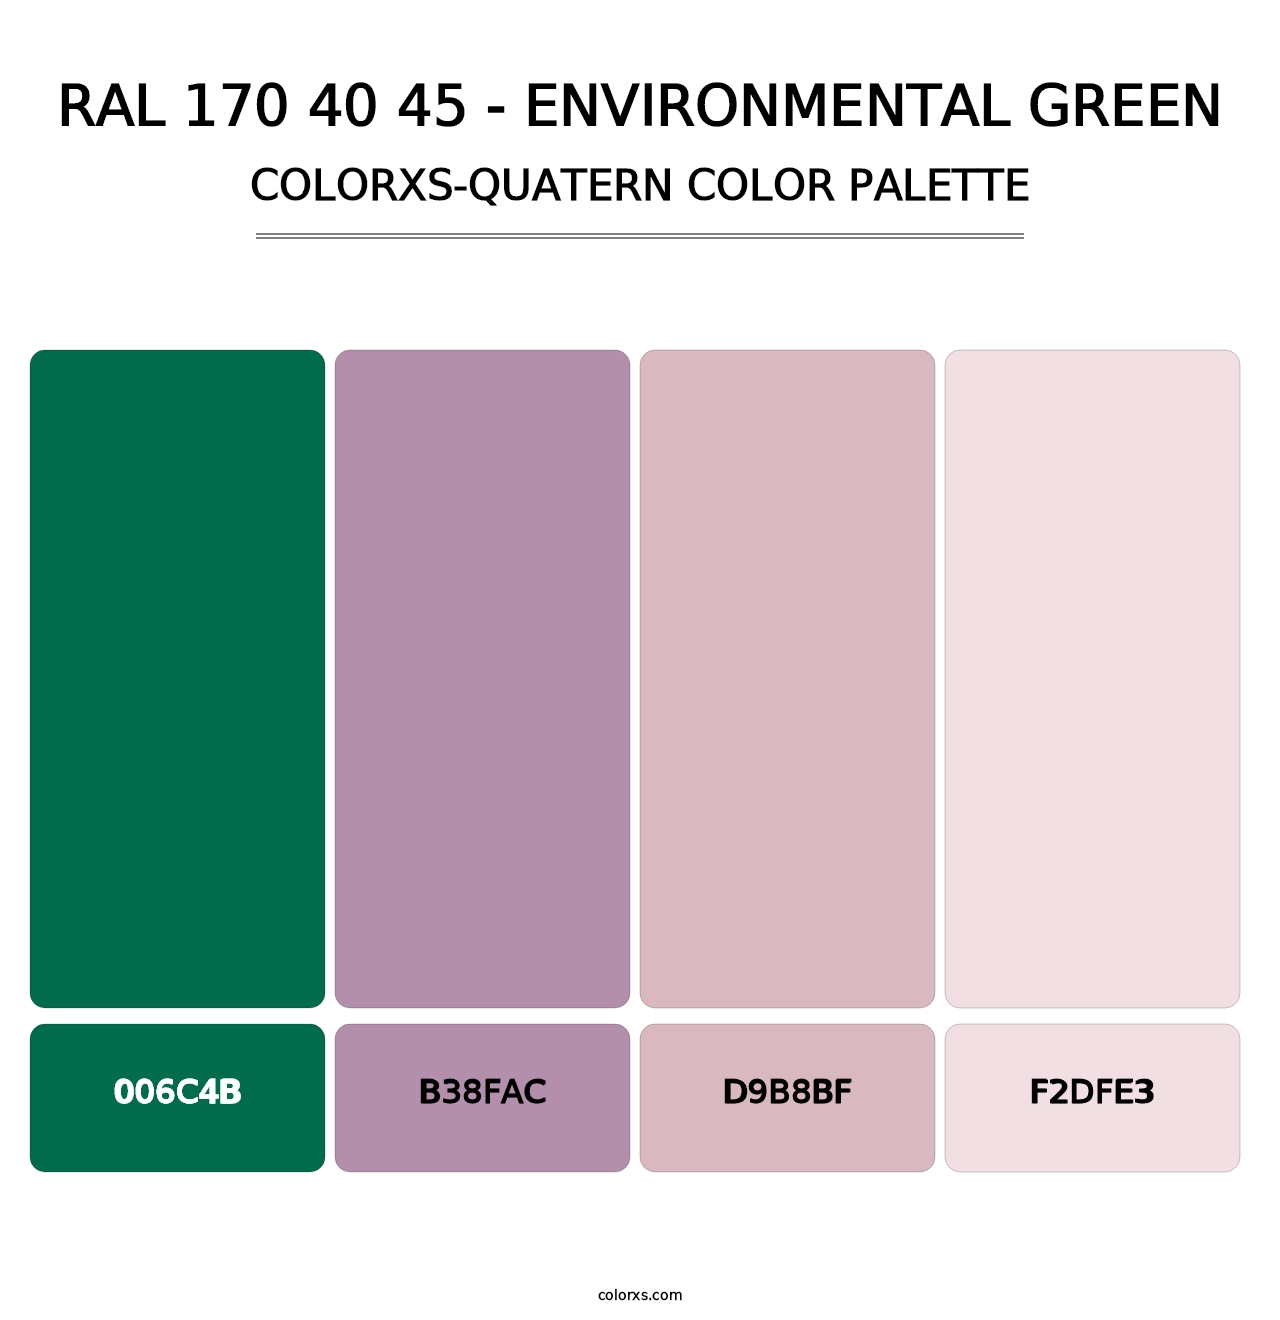 RAL 170 40 45 - Environmental Green - Colorxs Quatern Palette